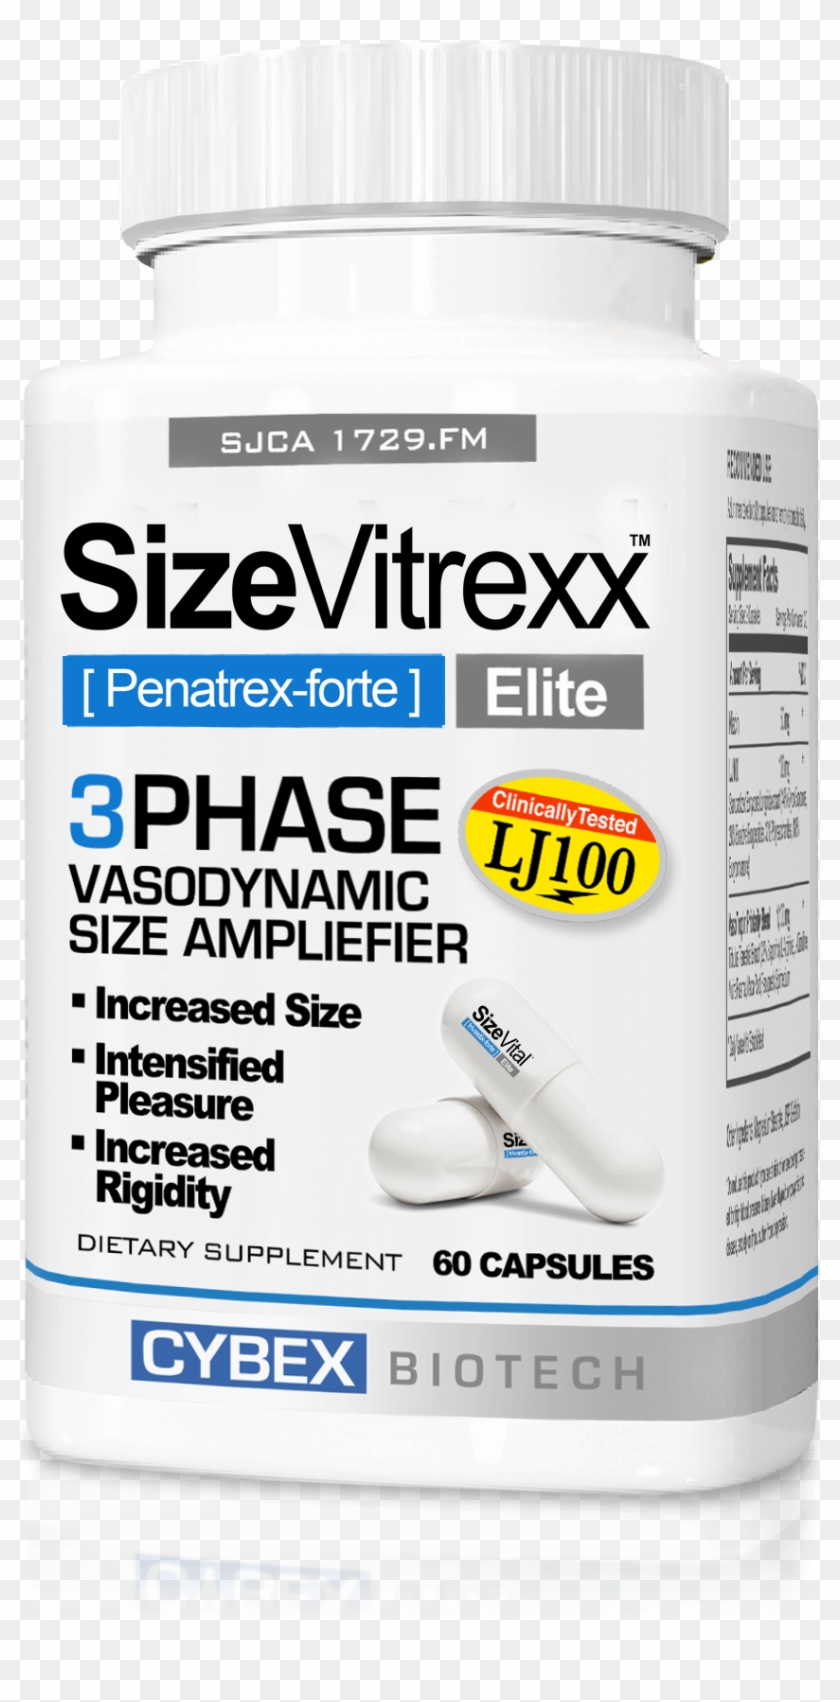 Sizevitrexx Bottle Sizevitrexx - Sizevitrexx Pills Clipart #3229937